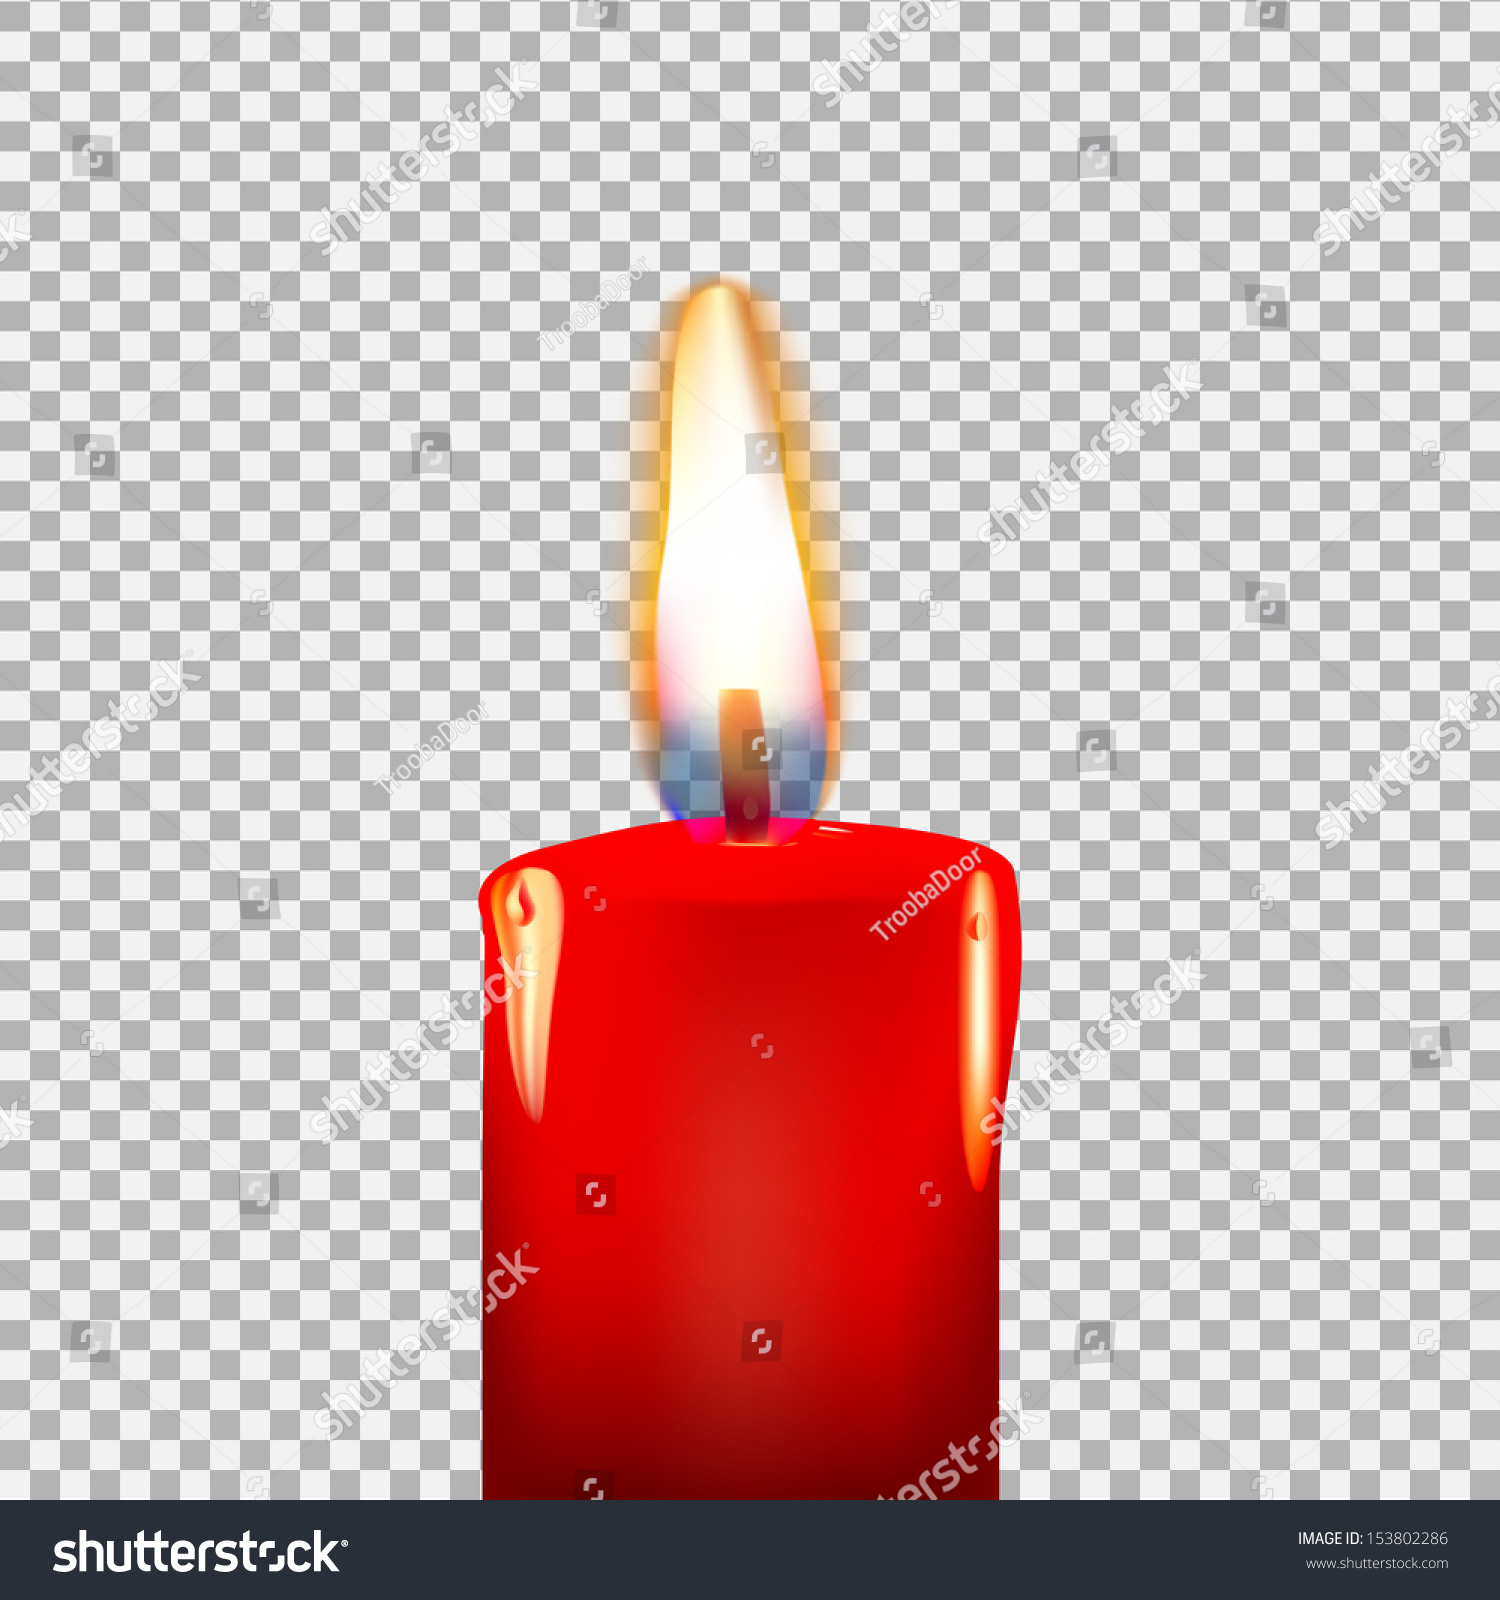 candle clipart transparent background